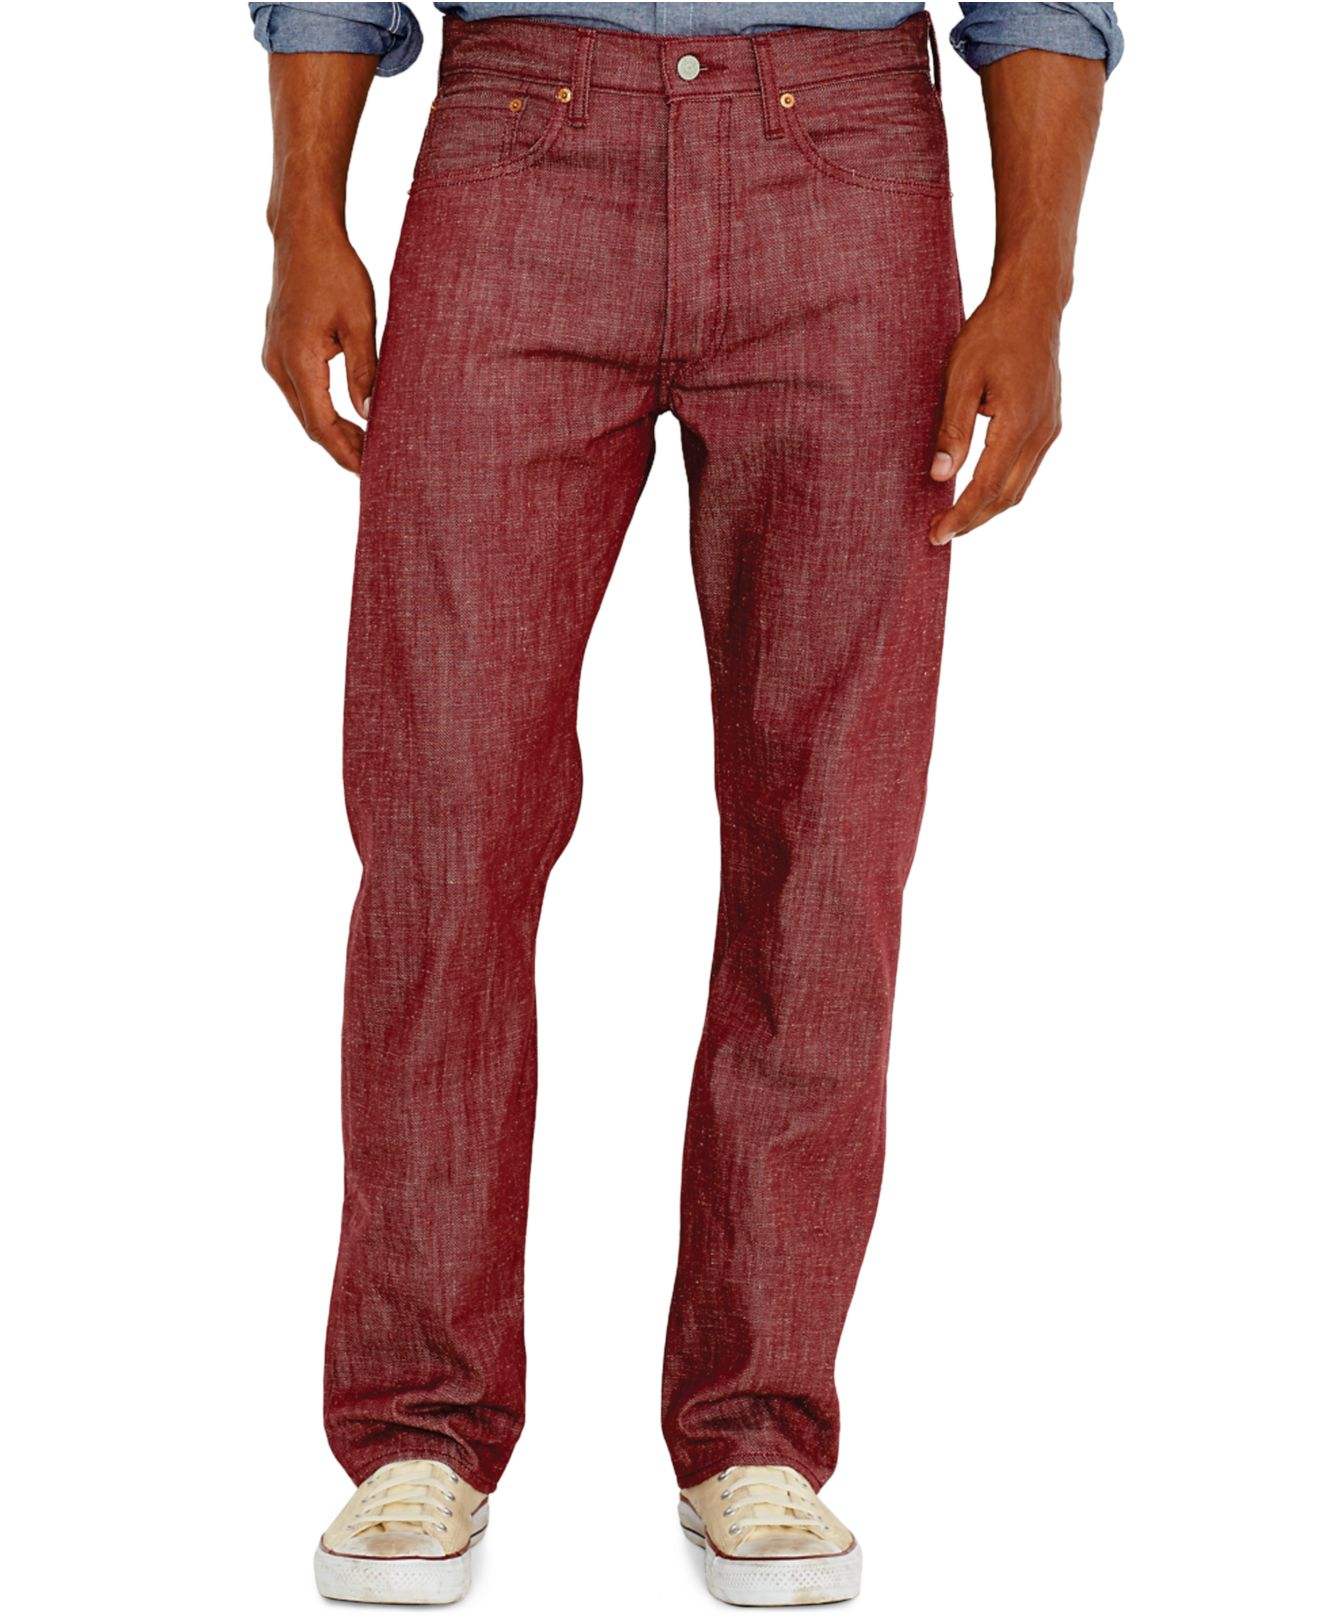 https://cdnd.lystit.com/photos/4cfd-2015/08/28/levis-tibitian-red-crispy-neppy-501-original-shrink-to-fit-tibetian-red-crispy-neppy-jeans-product-0-463063294-normal.jpeg